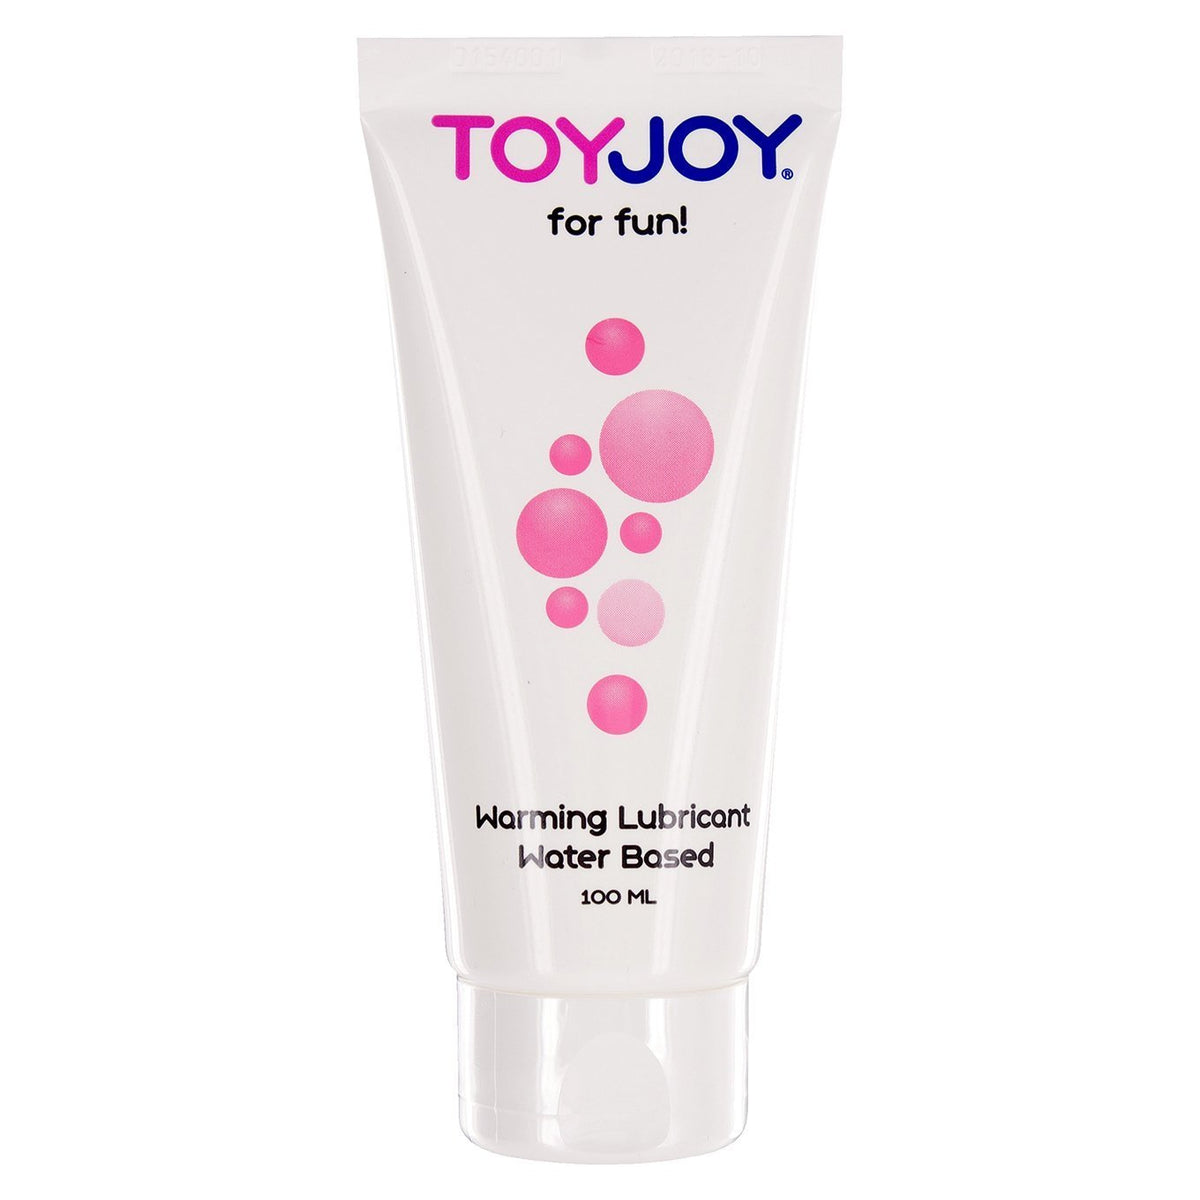 ToyJoy - Warming Lubricant Waterbased 100 ml -  Warming Lube  Durio.sg